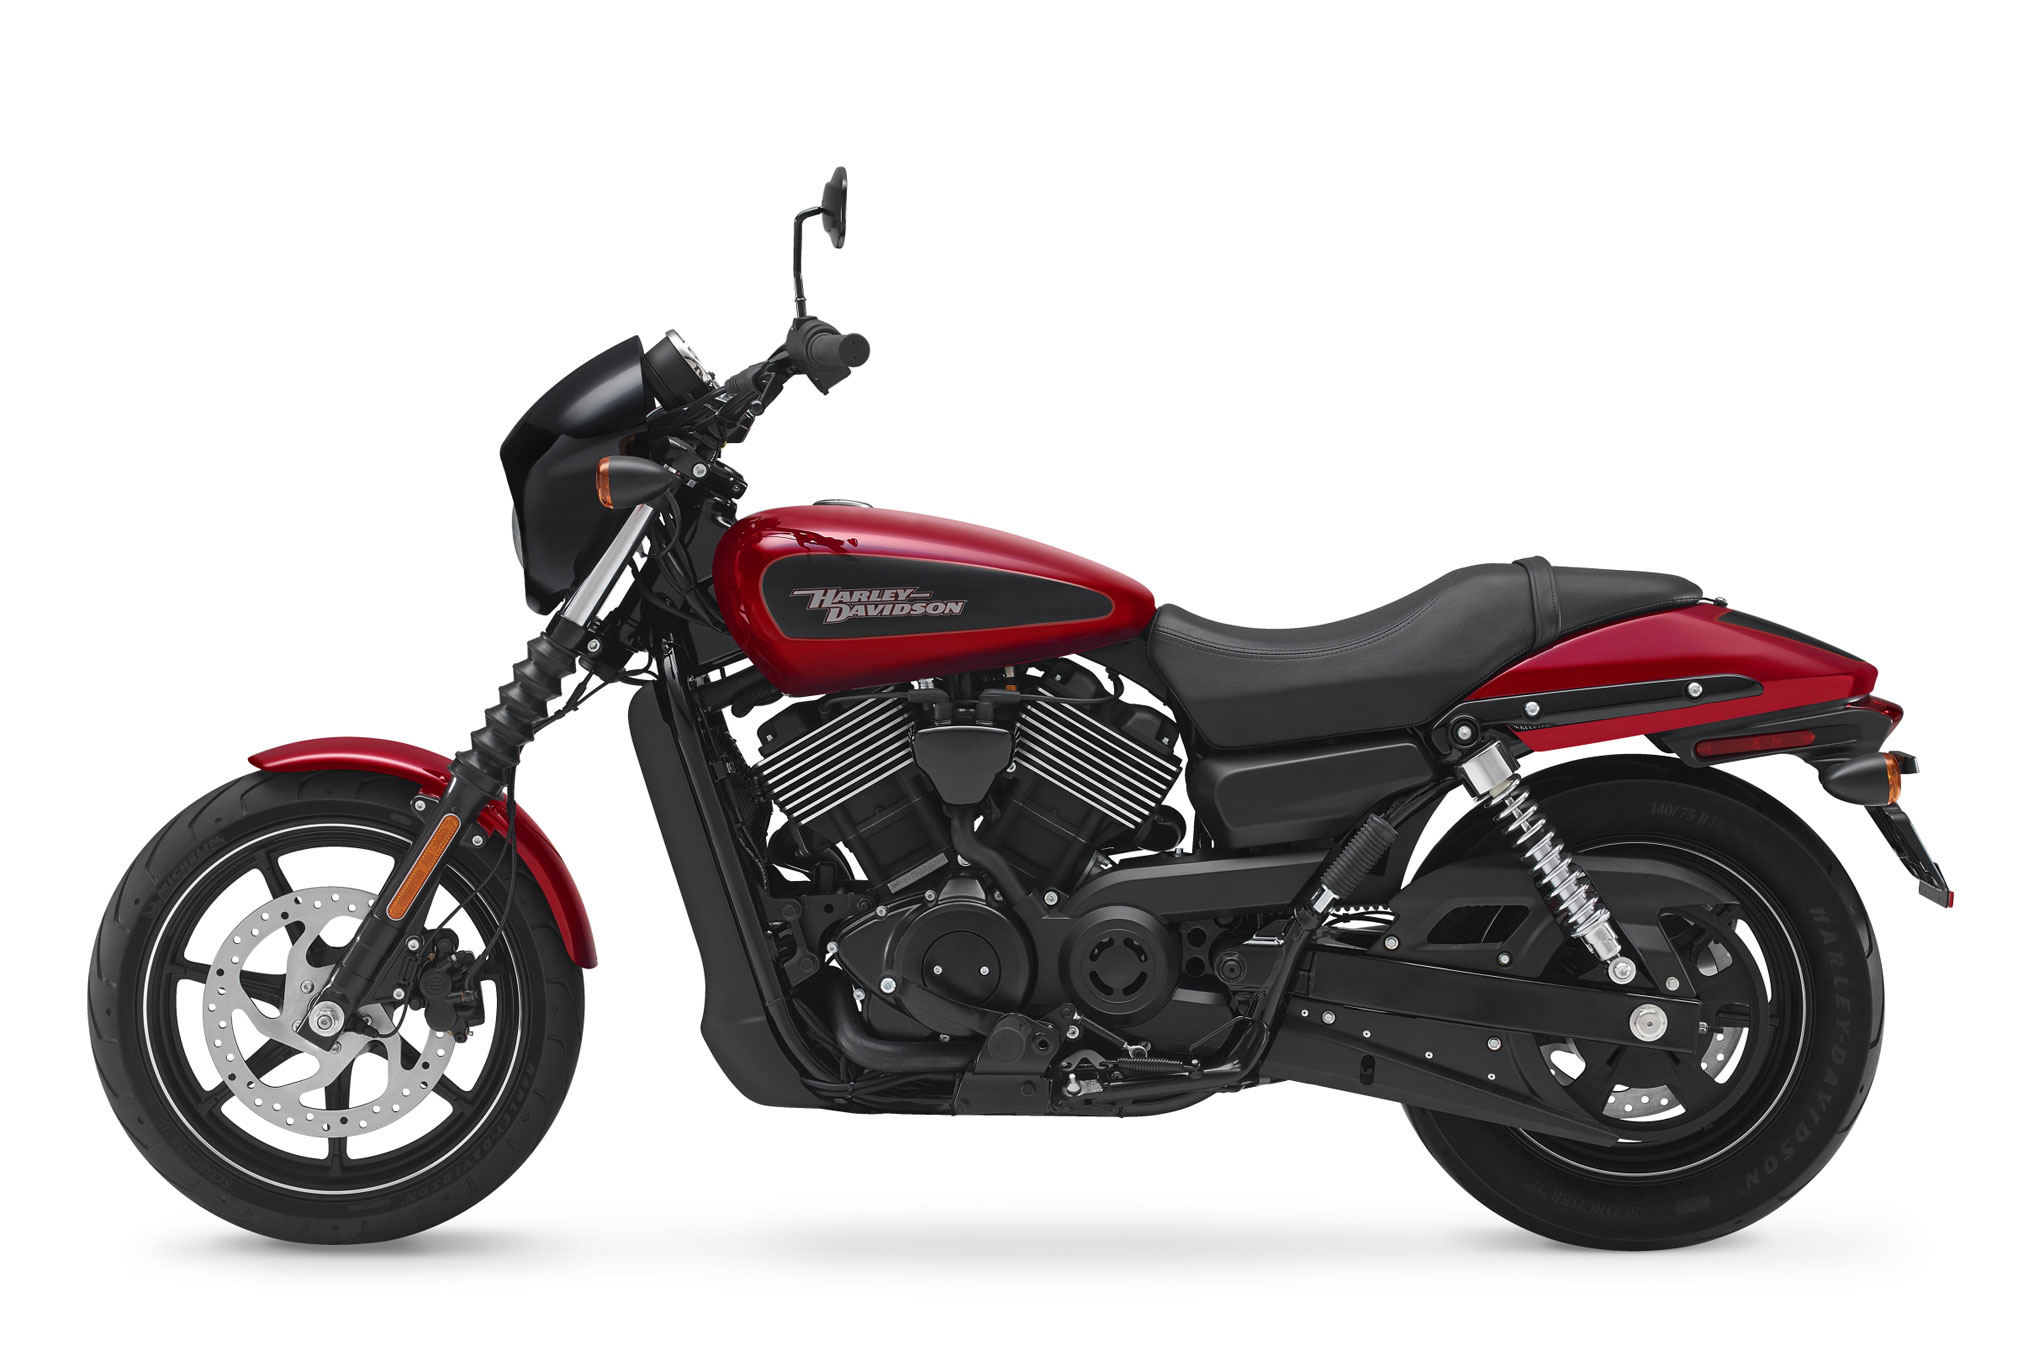 2018 Harley-Davidson Street 750 Review • Total Motorcycle